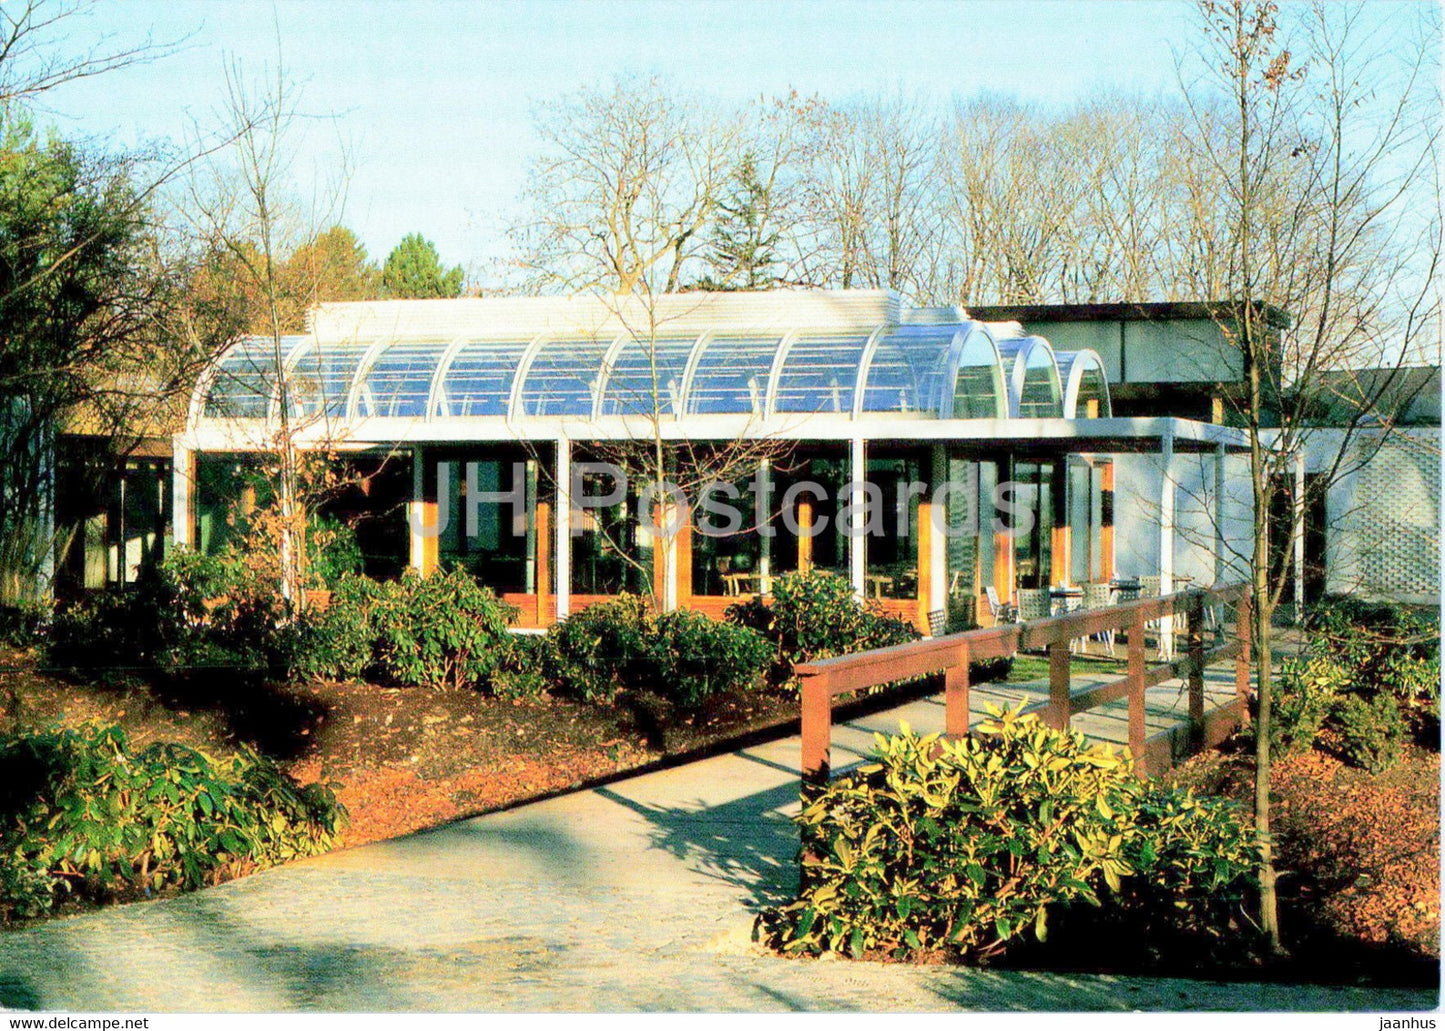 Louisiana Museum of Modern Art - Winter garden with outdoor pergola - Denmark - unused - JH Postcards